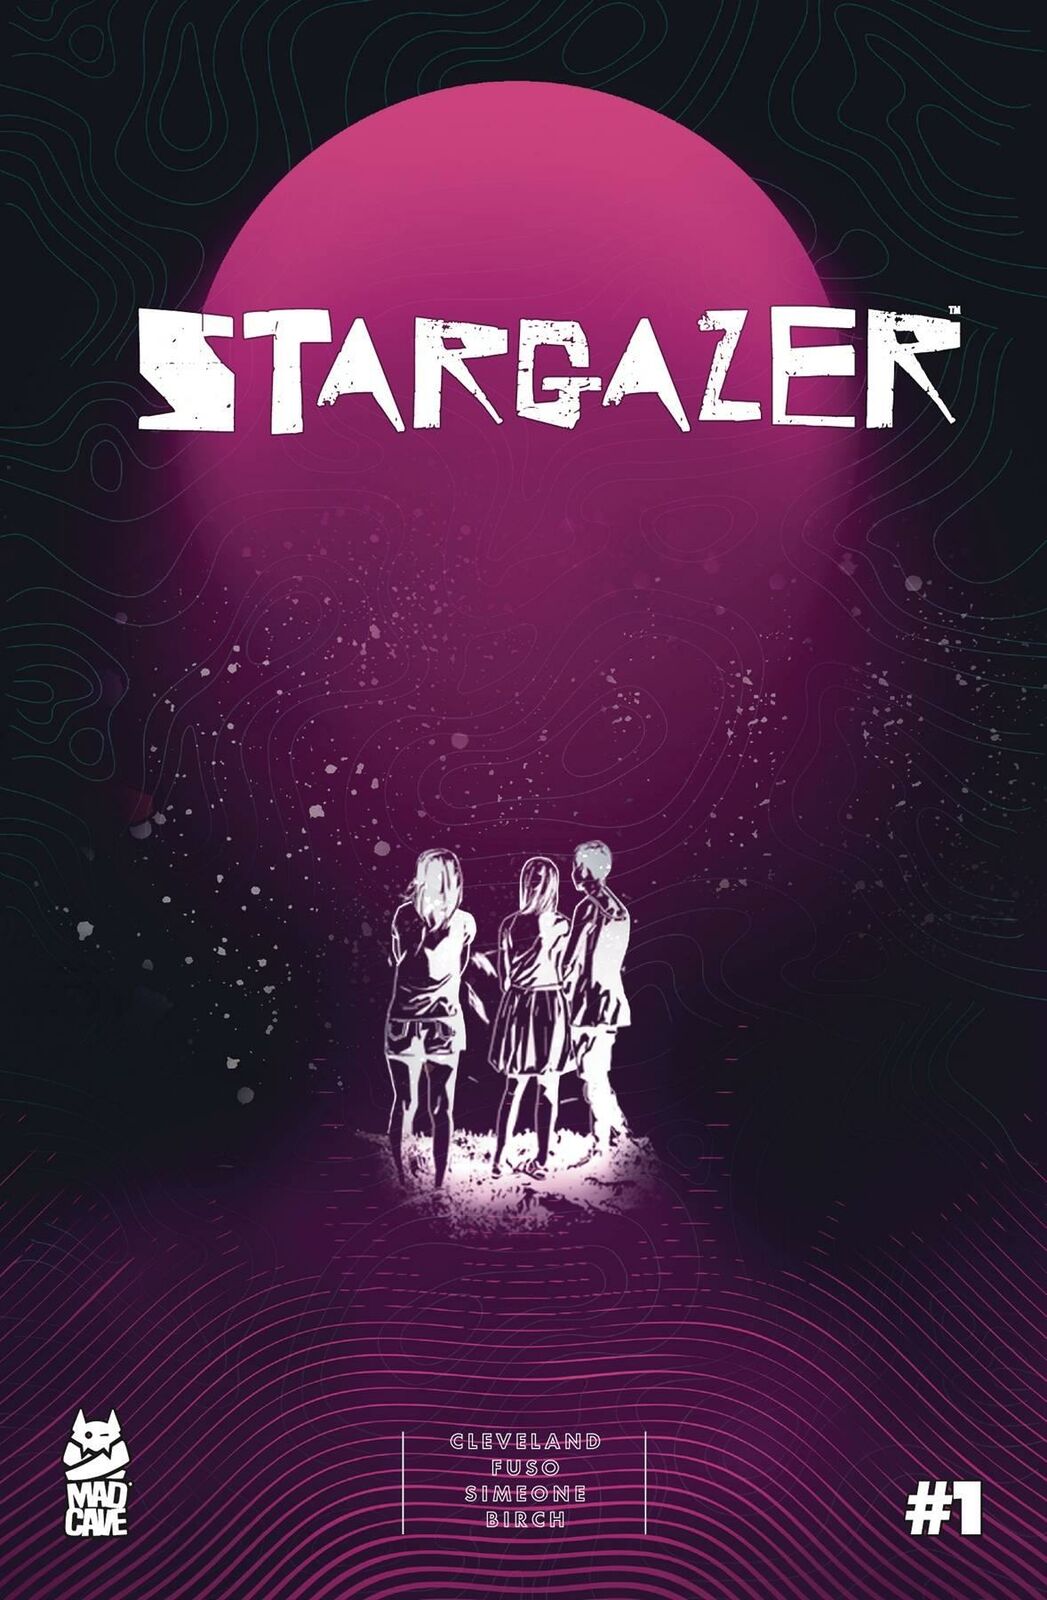 Stargazer #1 2nd ptg Mad Cave Studios Comic Book 2020